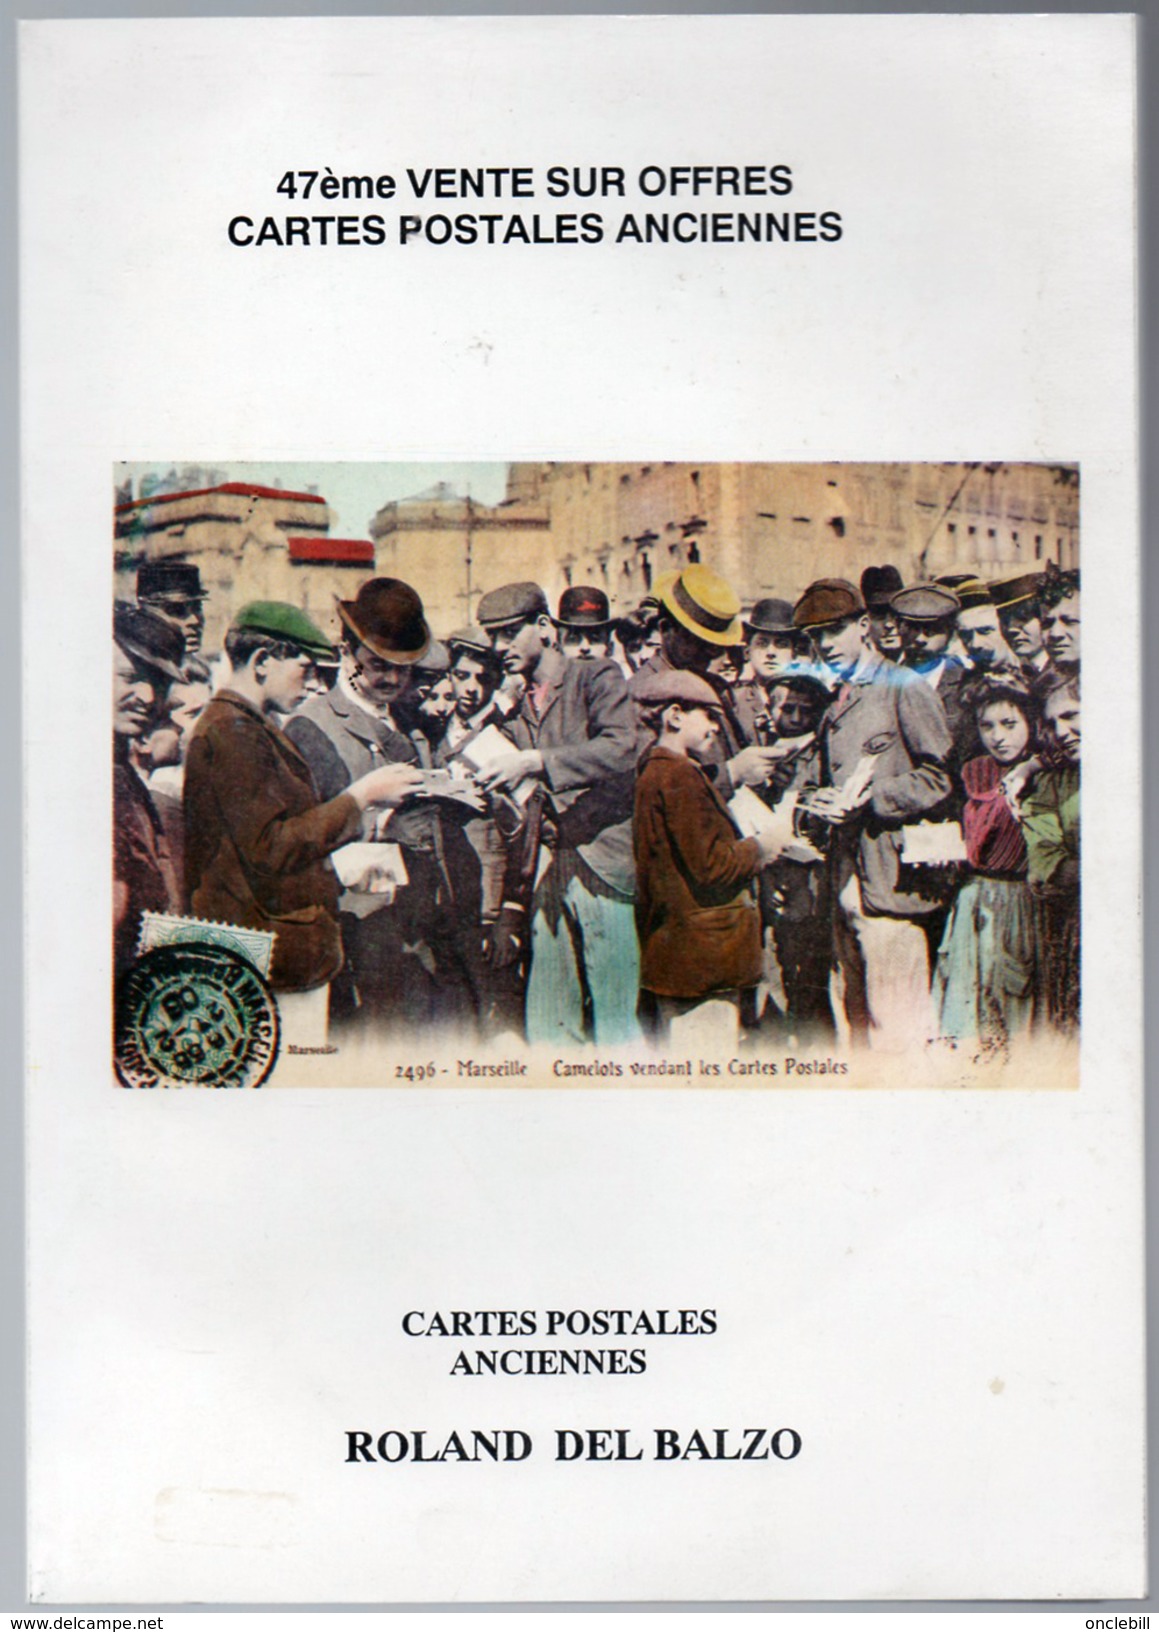 Catalogue Cartes Postales Vente Sur Offres Del Balzo N° 47 1993 état Superbe - Boeken & Catalogi